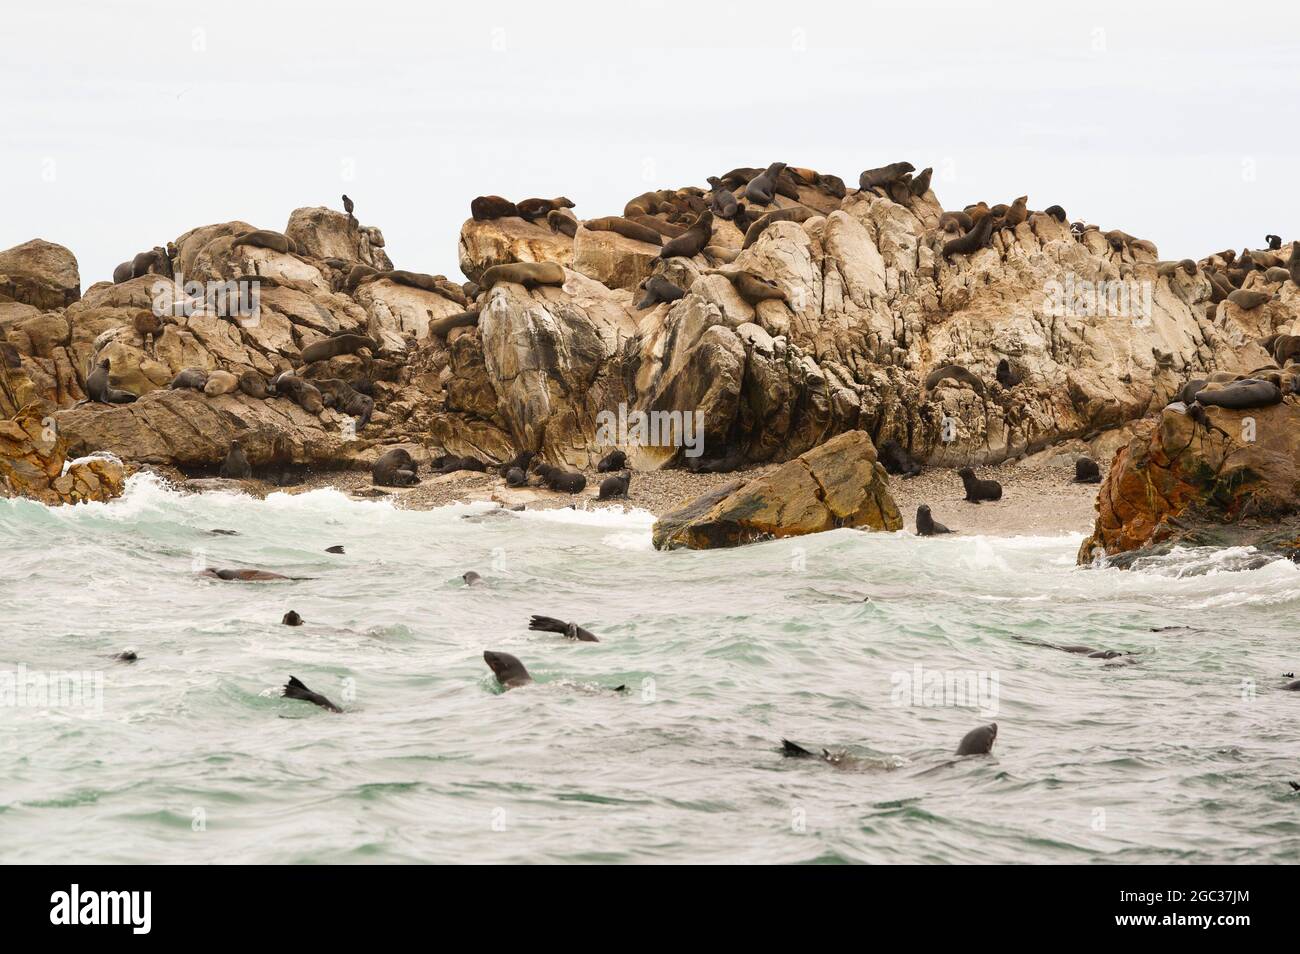 Cape fur seal colony on Geyser Rock, Arctocephalus pusillus, Gansbaai, South Africa Stock Photo